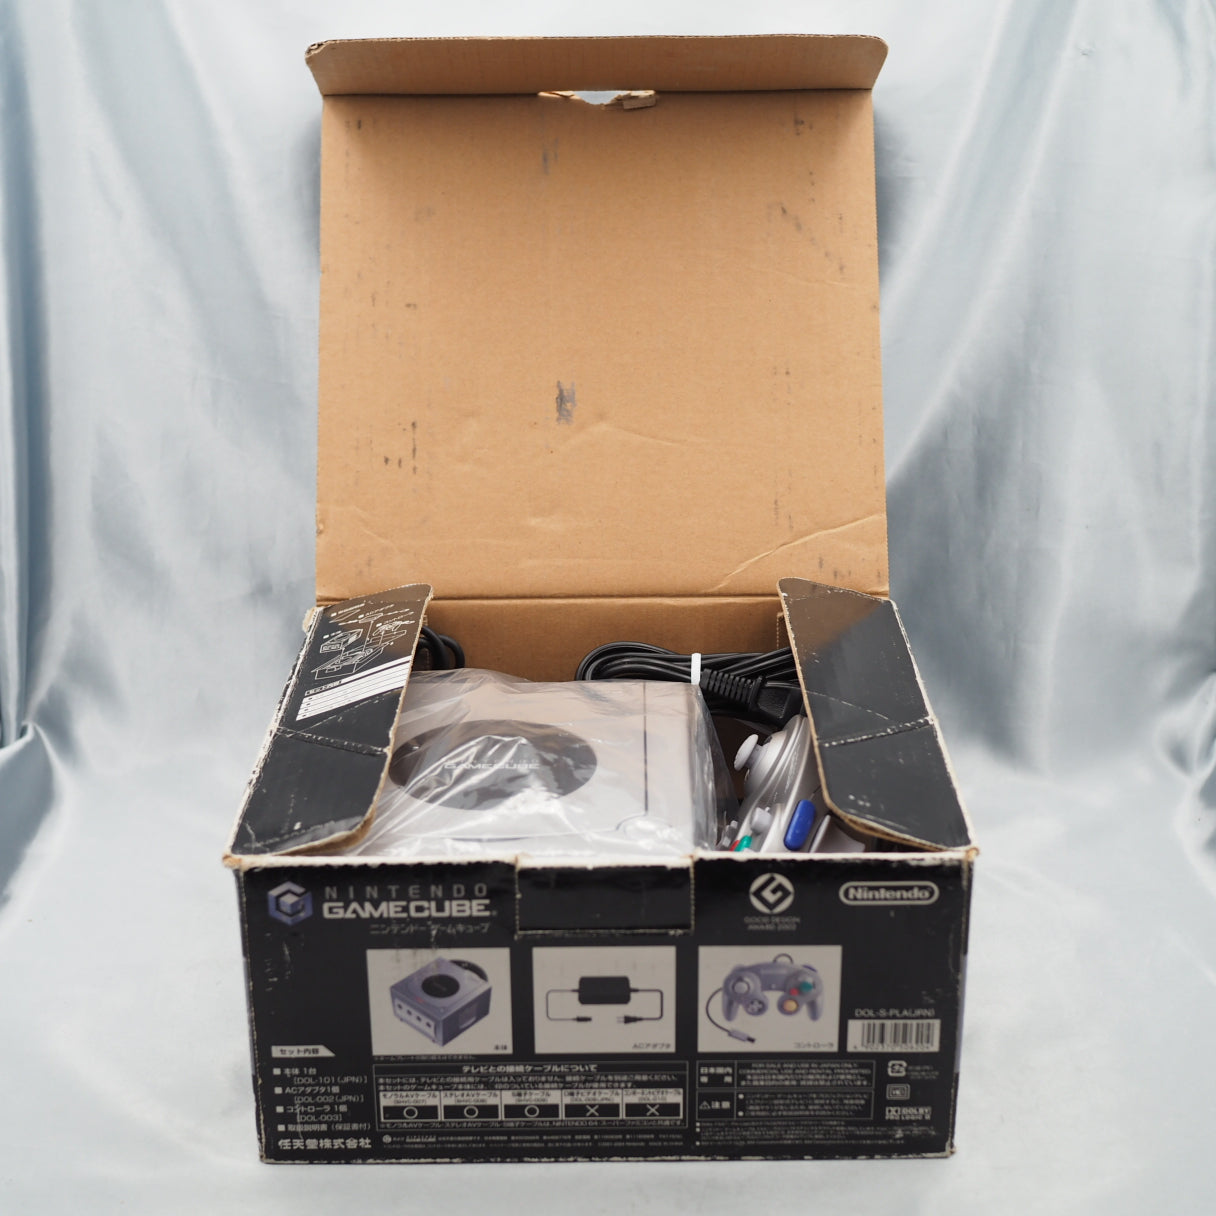 Nintendo GameCube Console System Silver Boxed + DONKEY KONGA Taru Konga Set